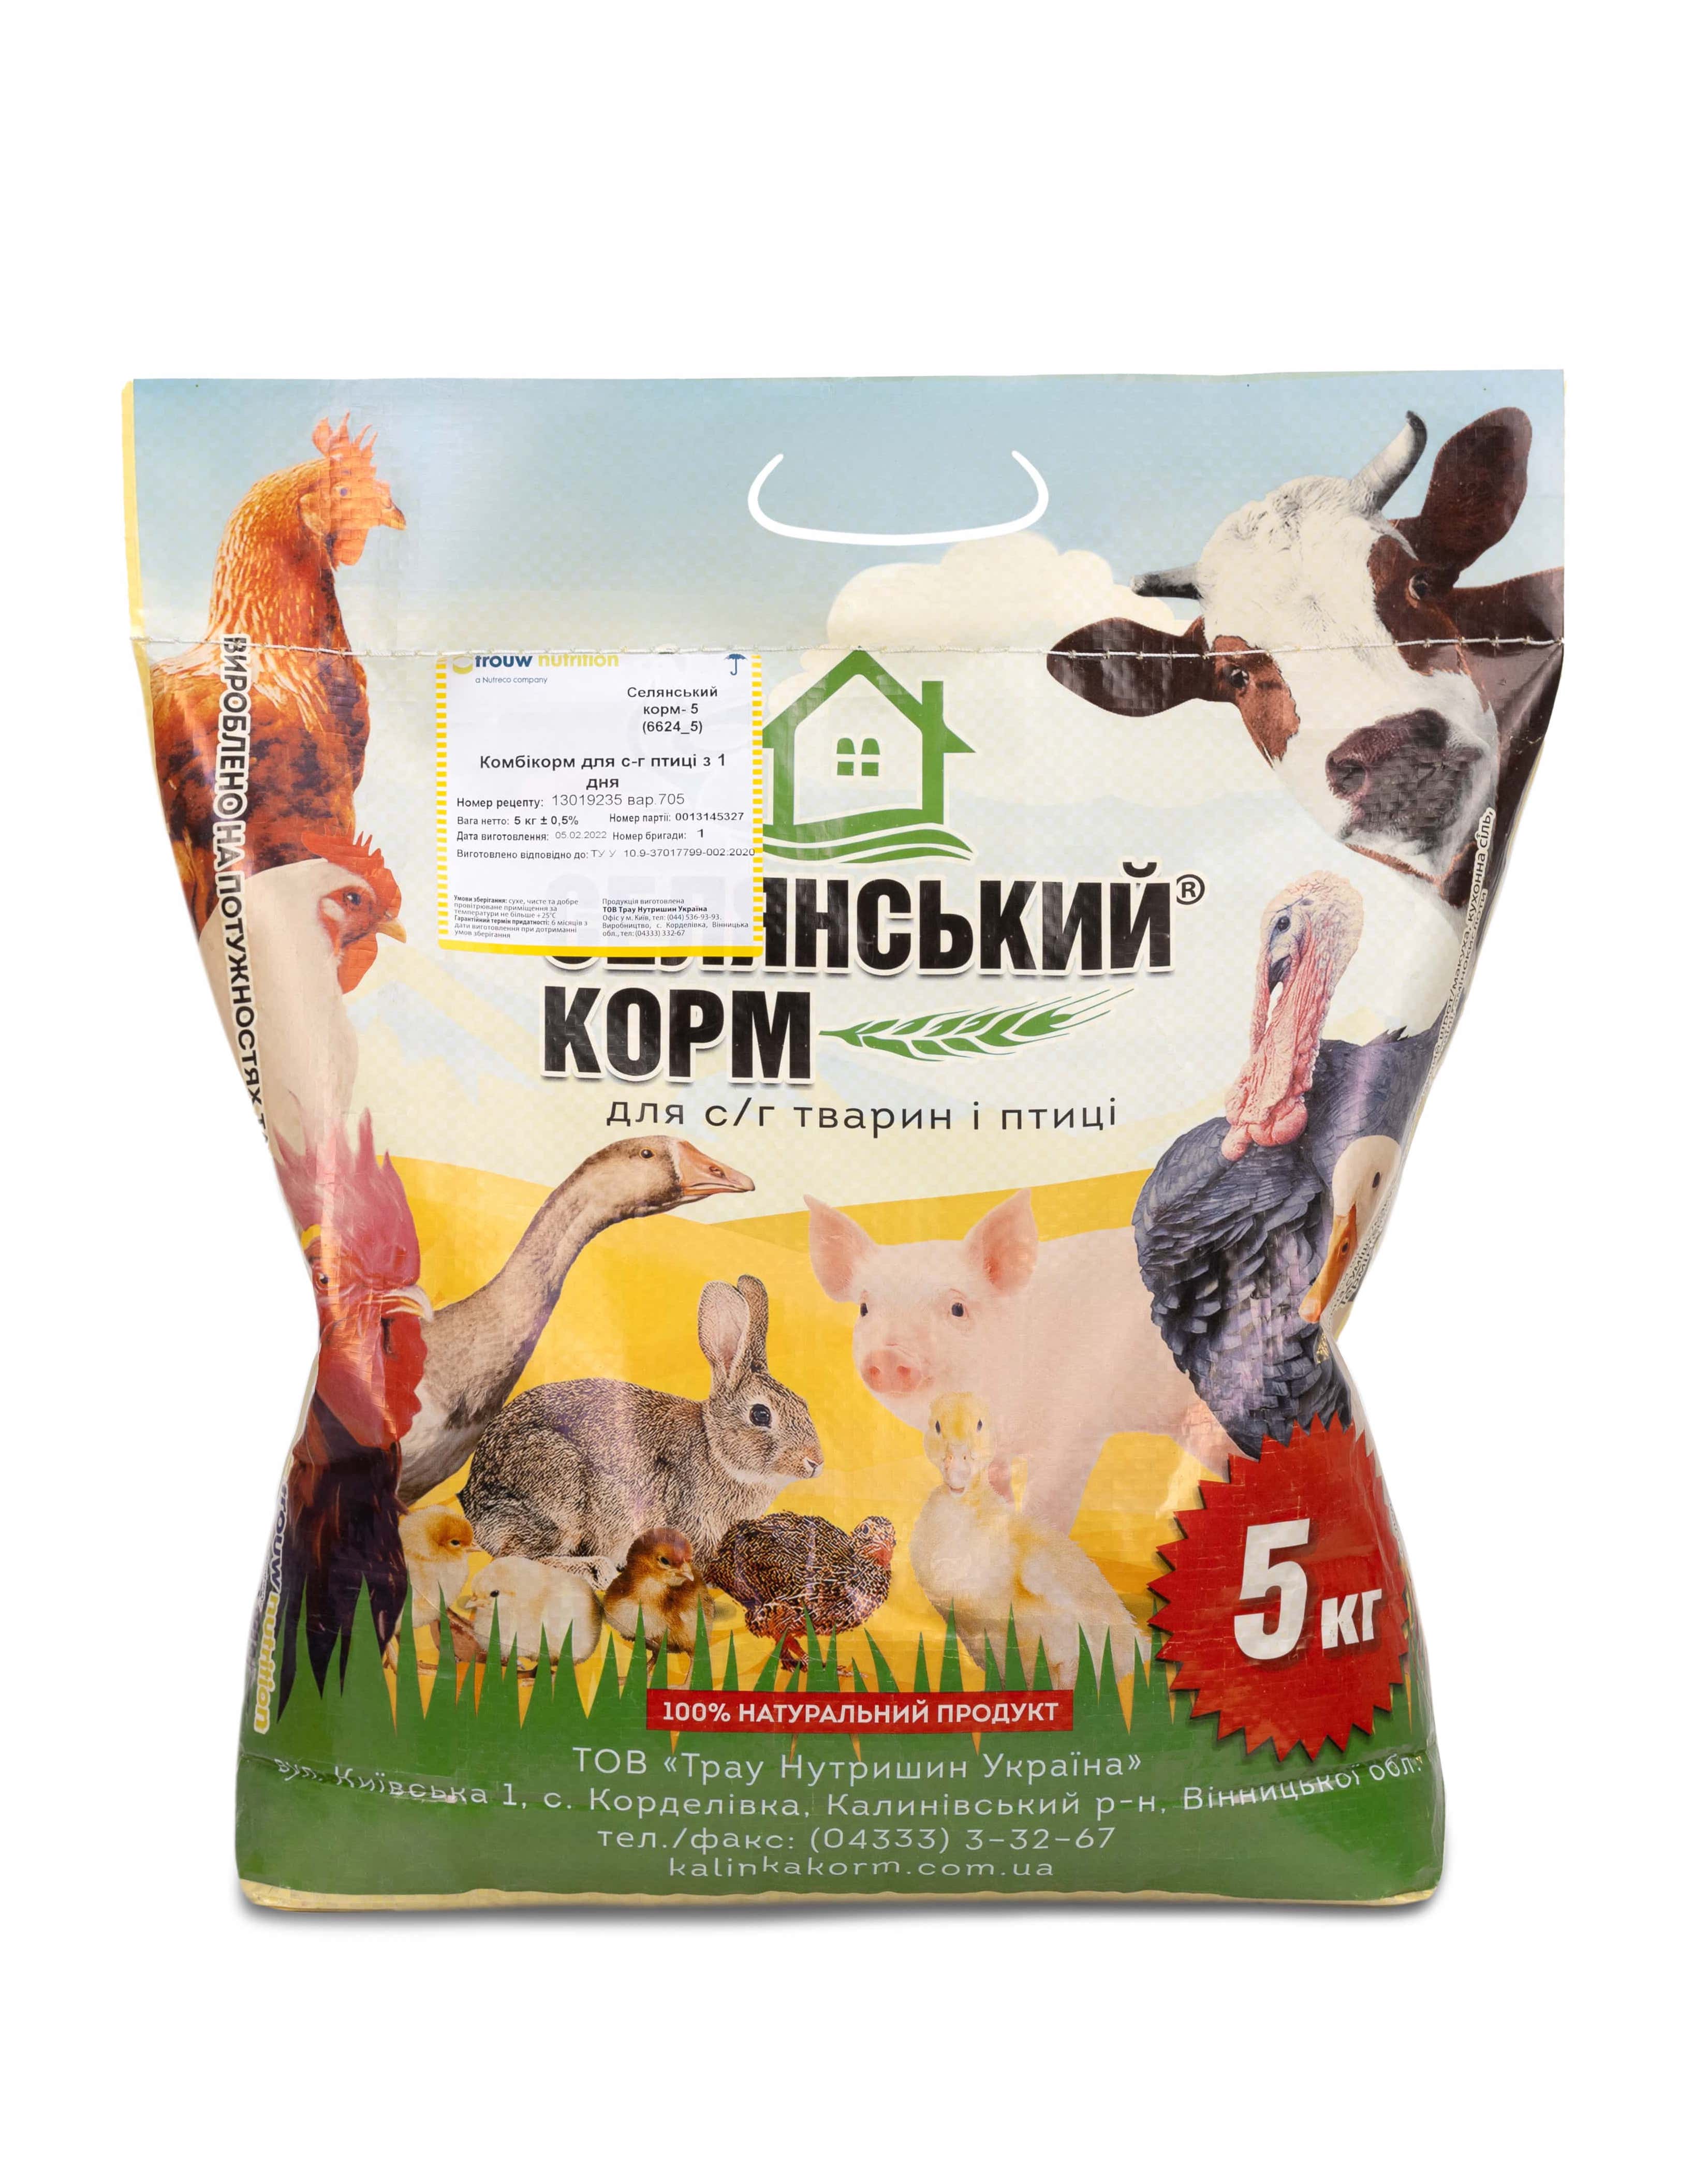 Селянський Корм -5 КТ 20% несучка, 5 кг БВМД